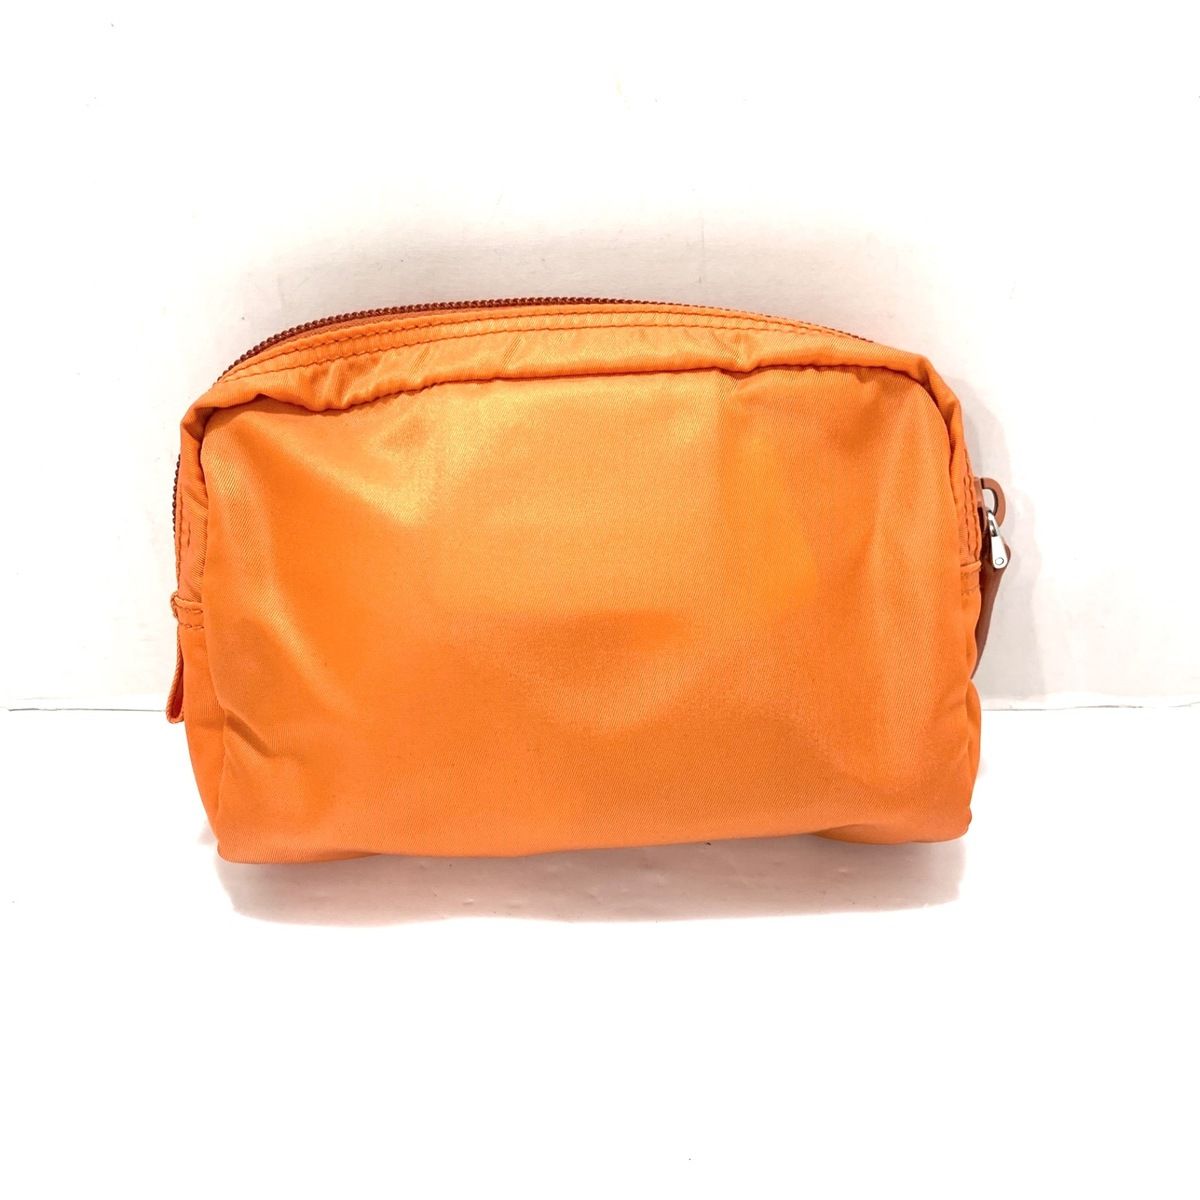 PRADA(プラダ) ポーチ美品 - 1N0339 オレンジ ナイロン - メルカリ